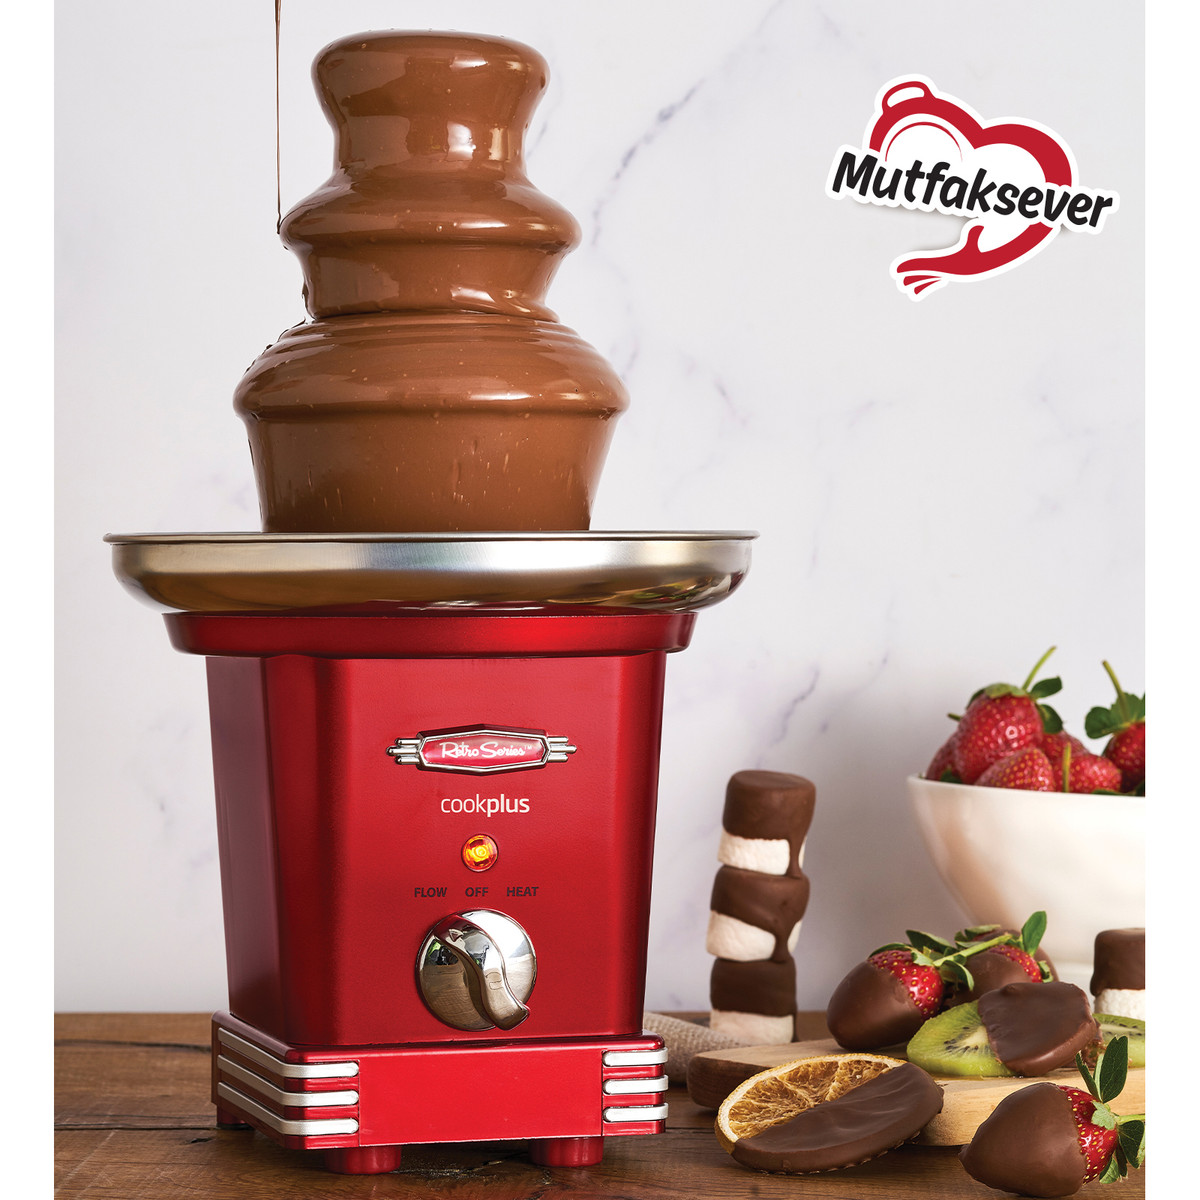 Cookplus Mutfaksever Fondü Makinesi Ve Çikolata Şelalesi Karaca Home